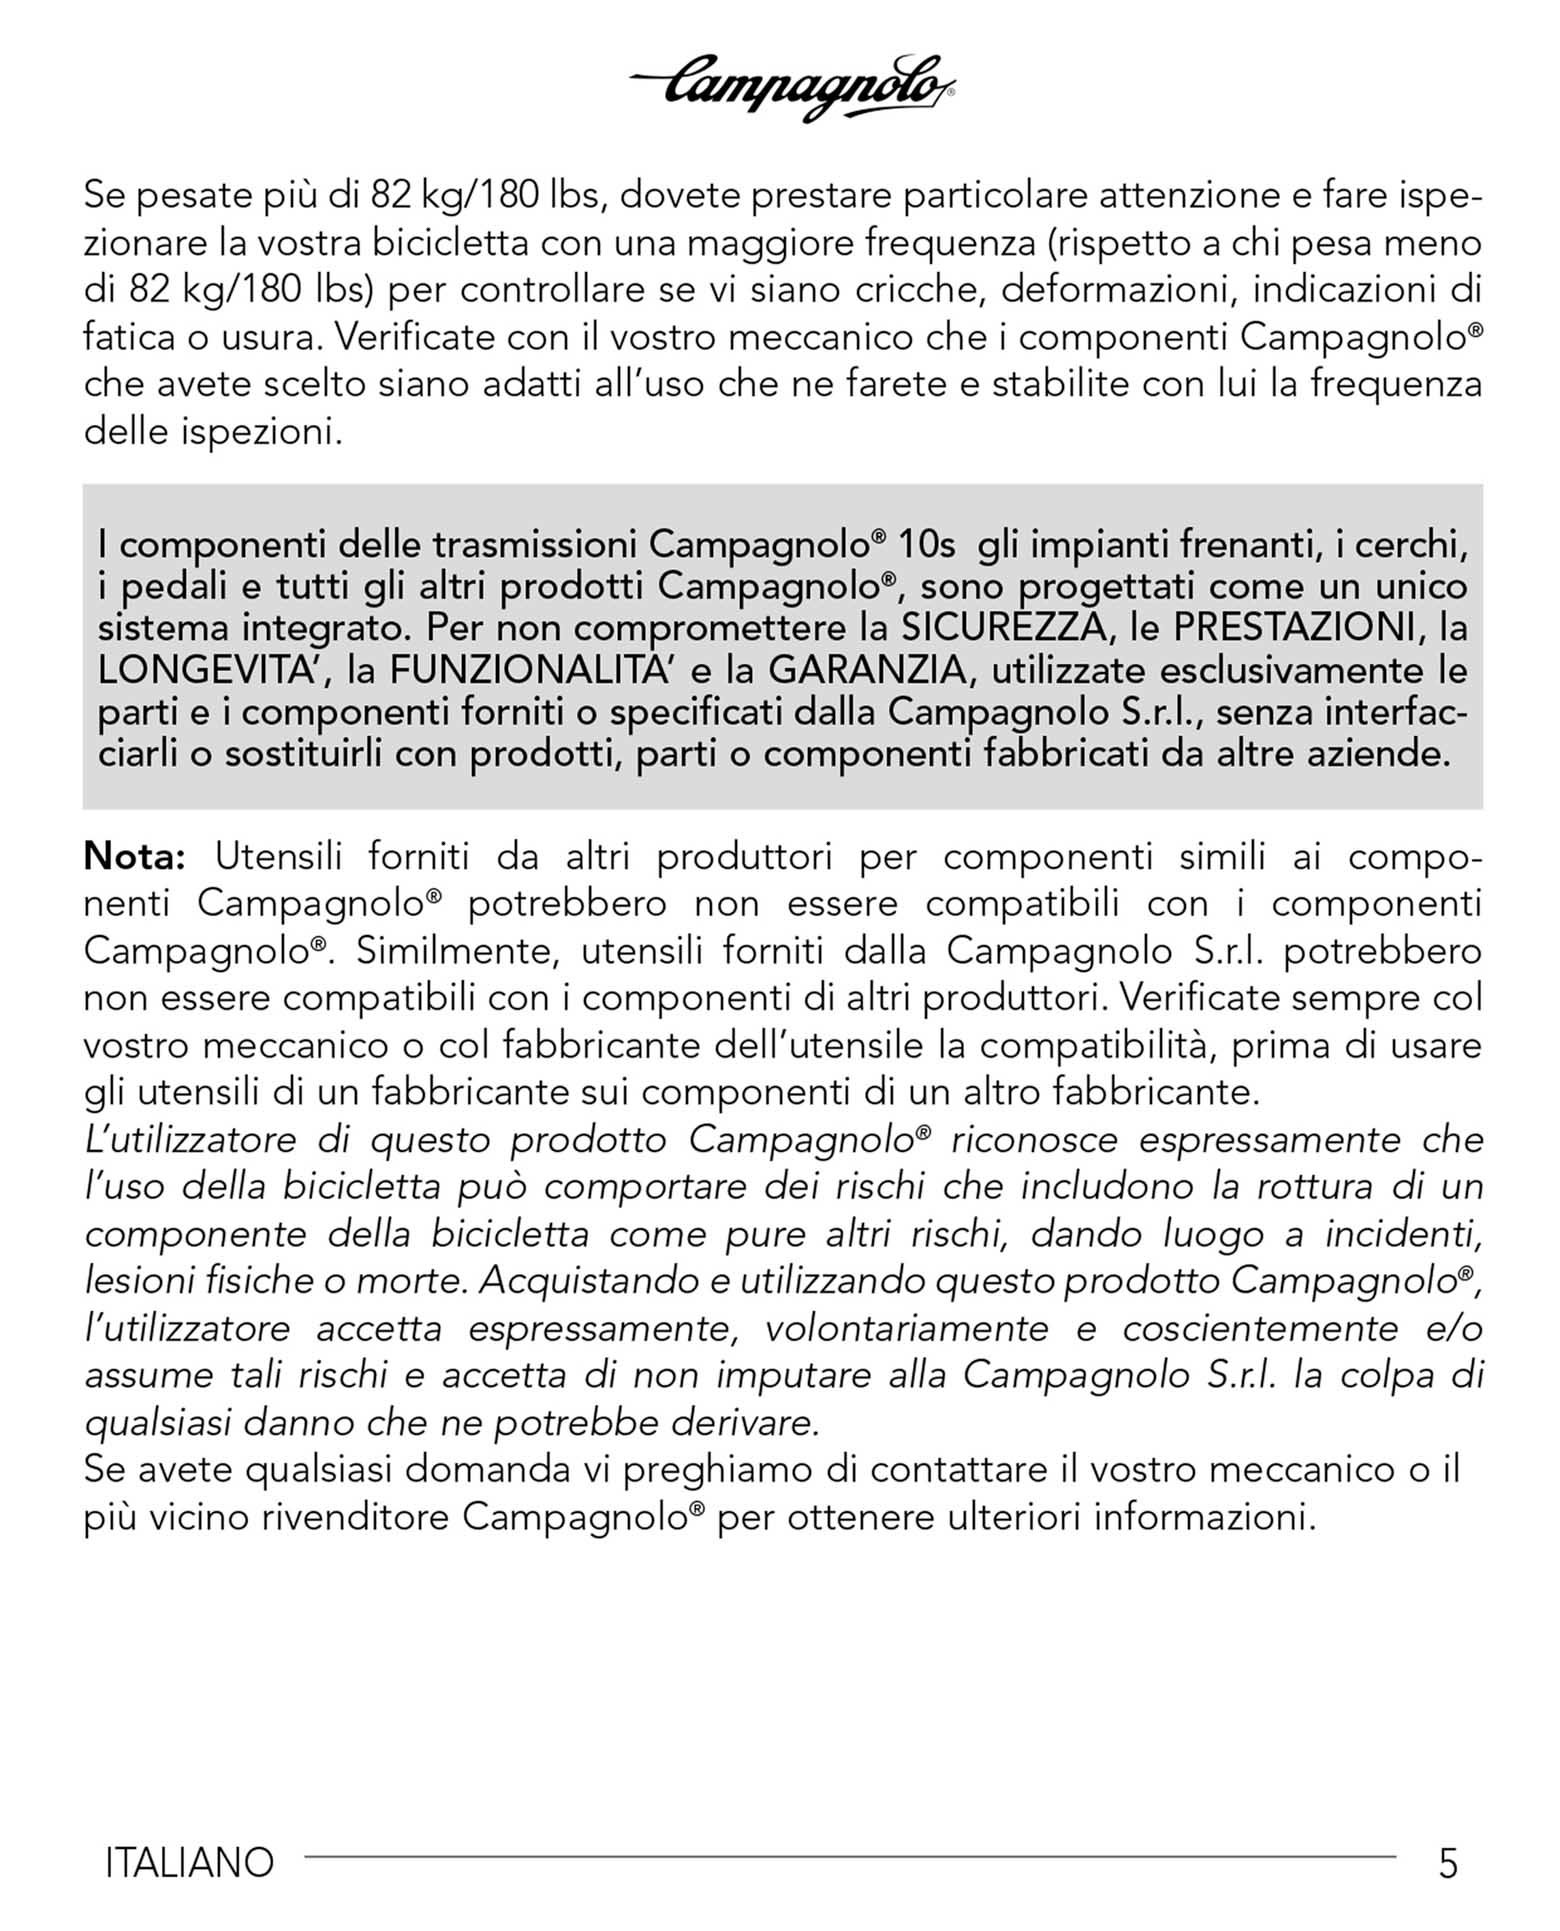 Campagnolo instructions - 7225475 Rear Der Usr Man ('01/2015') page 005 main image